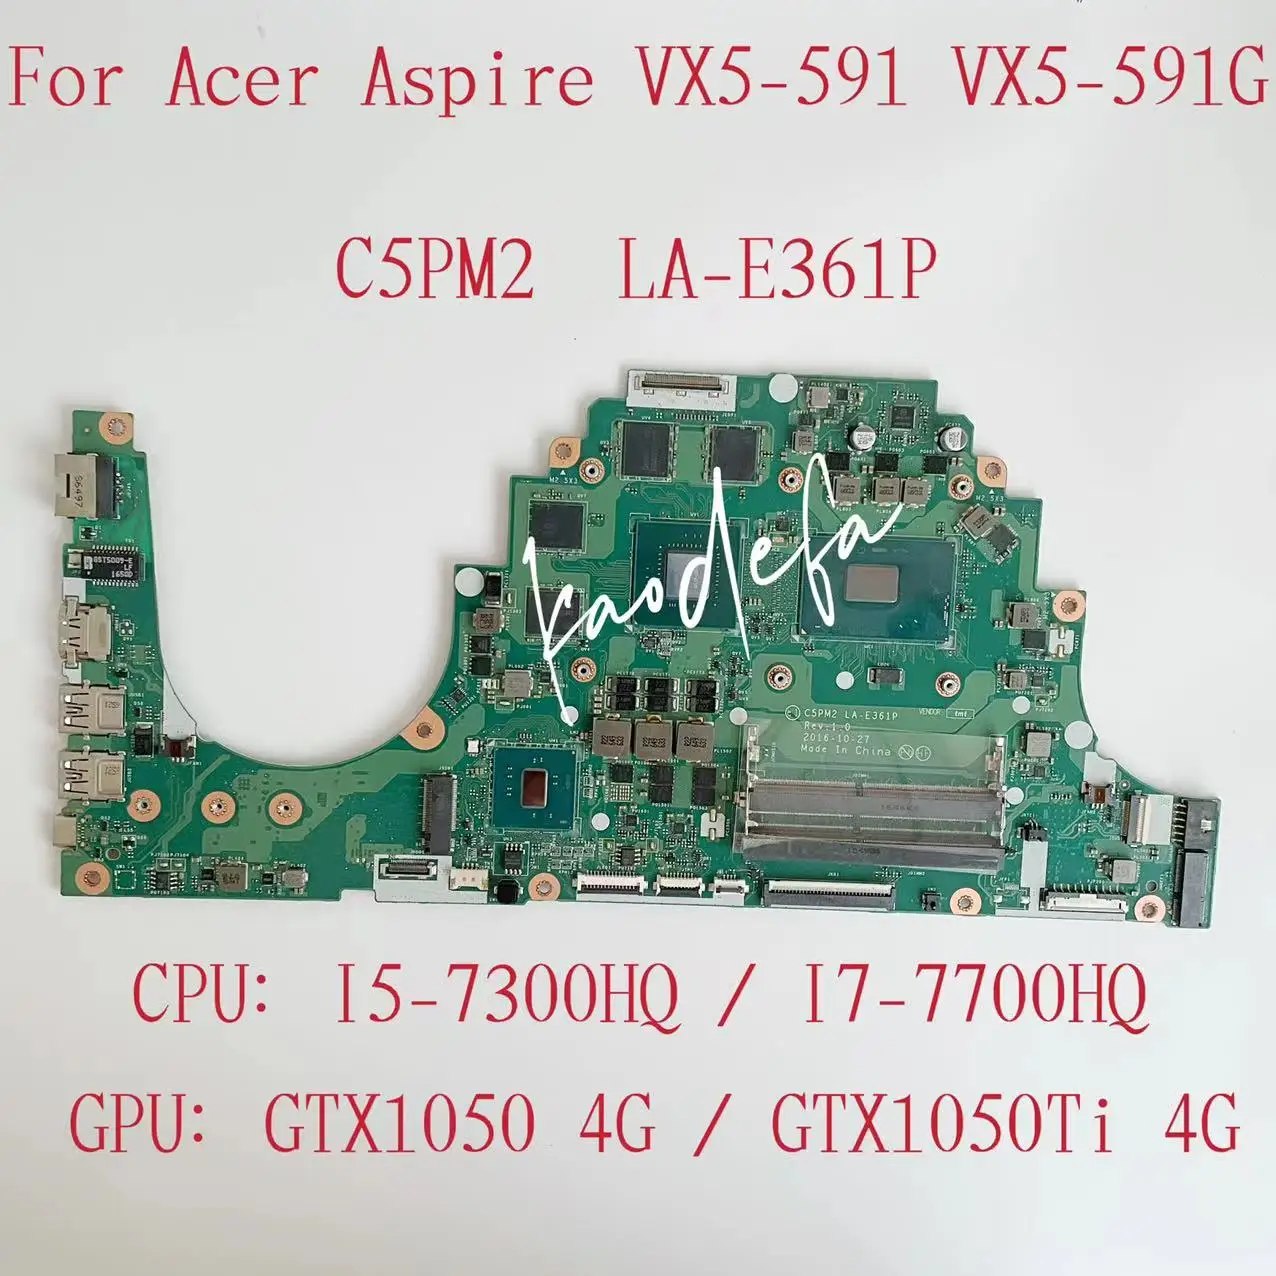 C5PM2 LA-E361P Tablica główna dla Acer Aspire VX5-591 Laptop Motherboard CPU I5-7300HQ / I7-7700HQ GPU: GTX1050 / 1050TI 4G Test OK OK OK OK OK OK OK